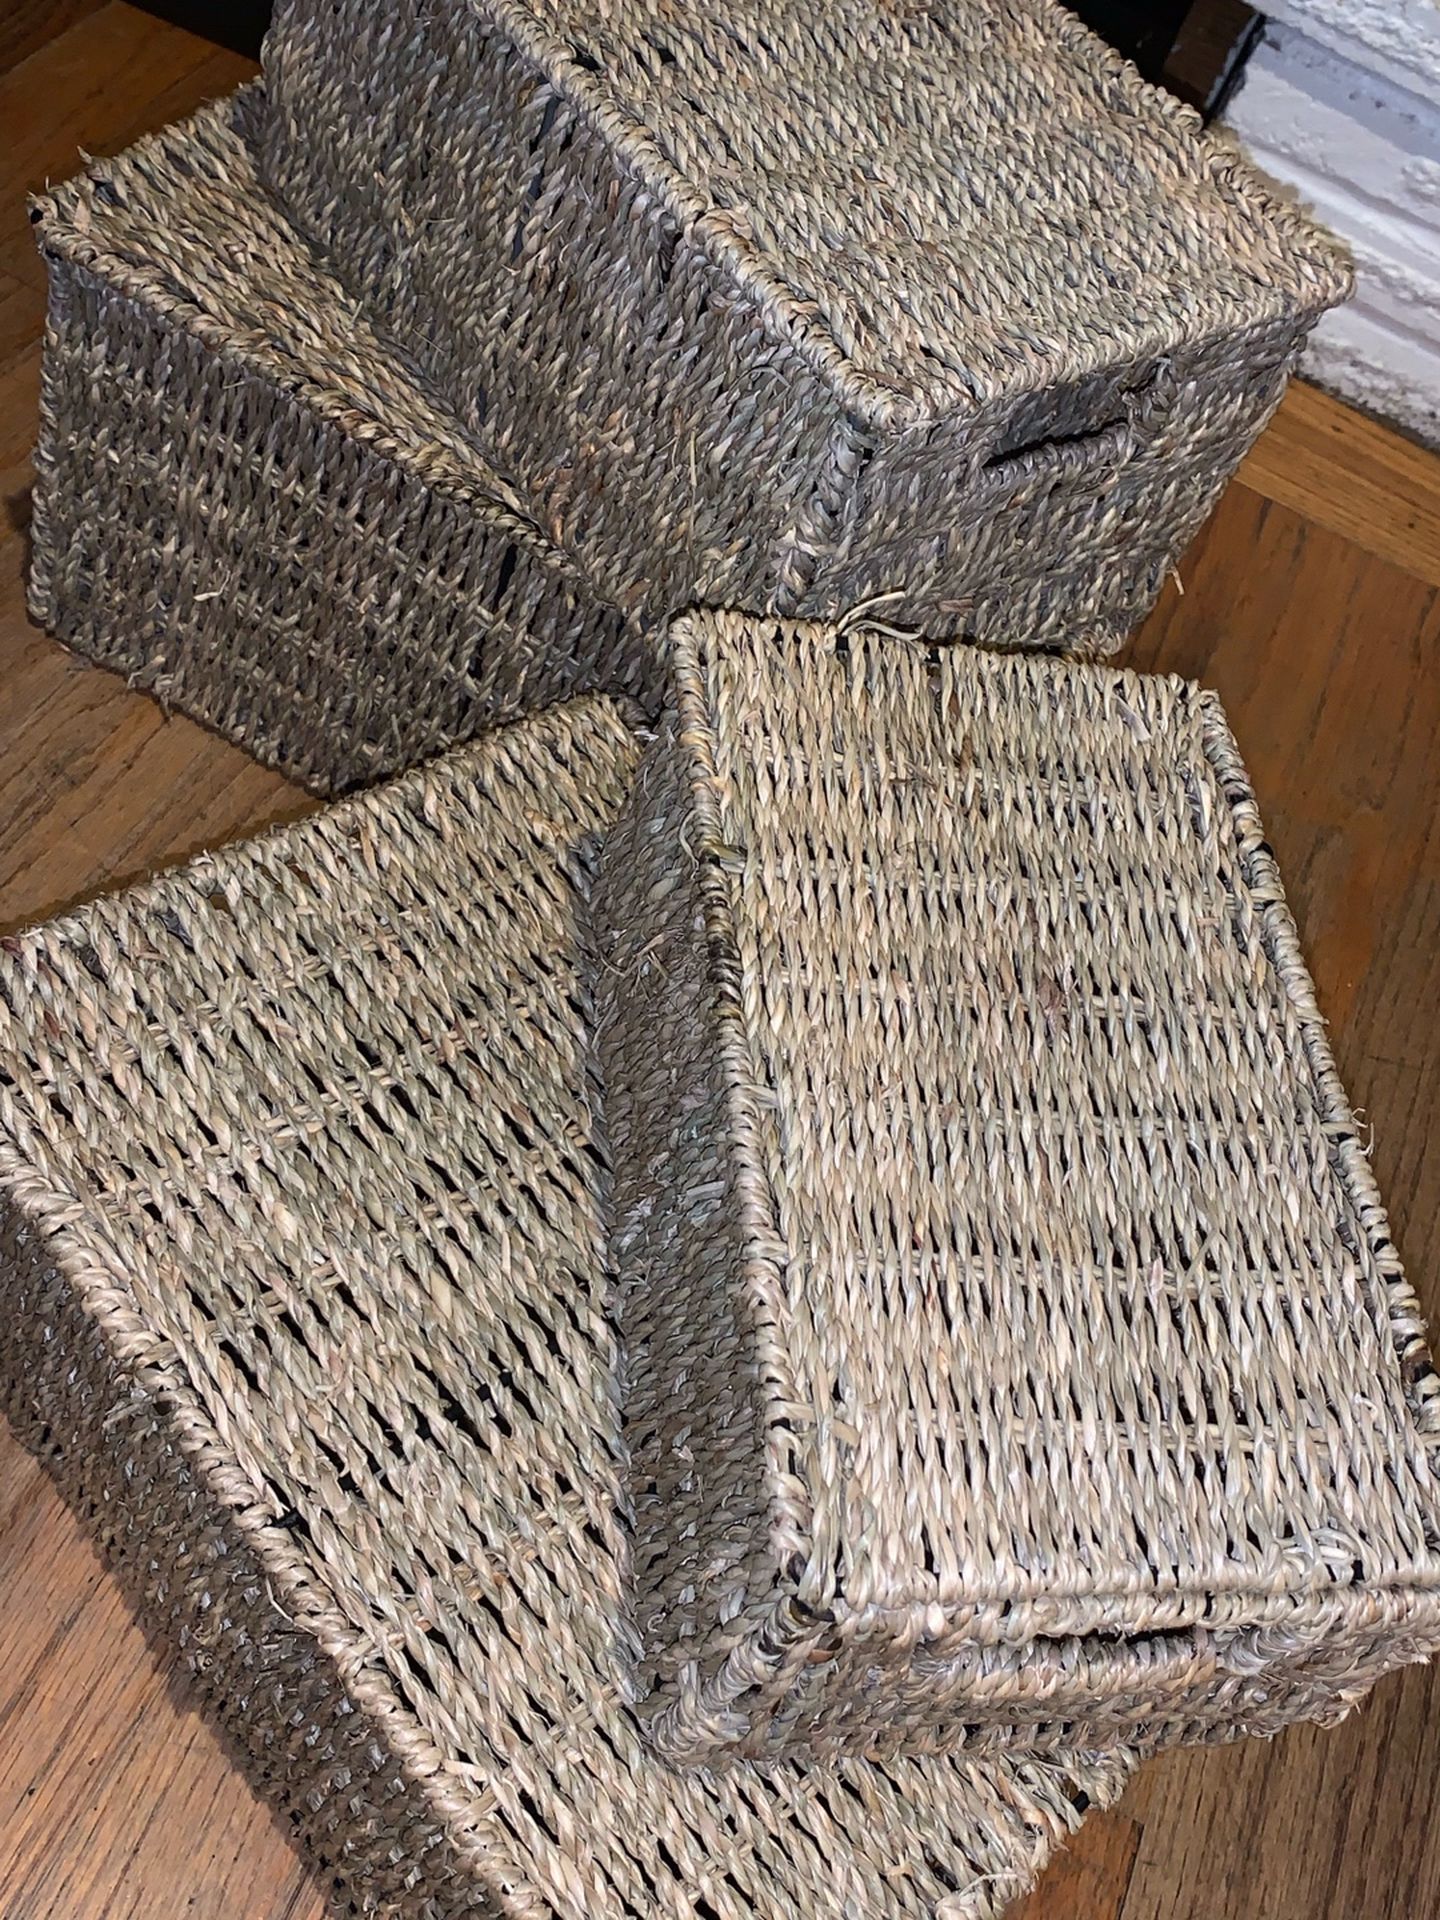 Small Storage Baskets